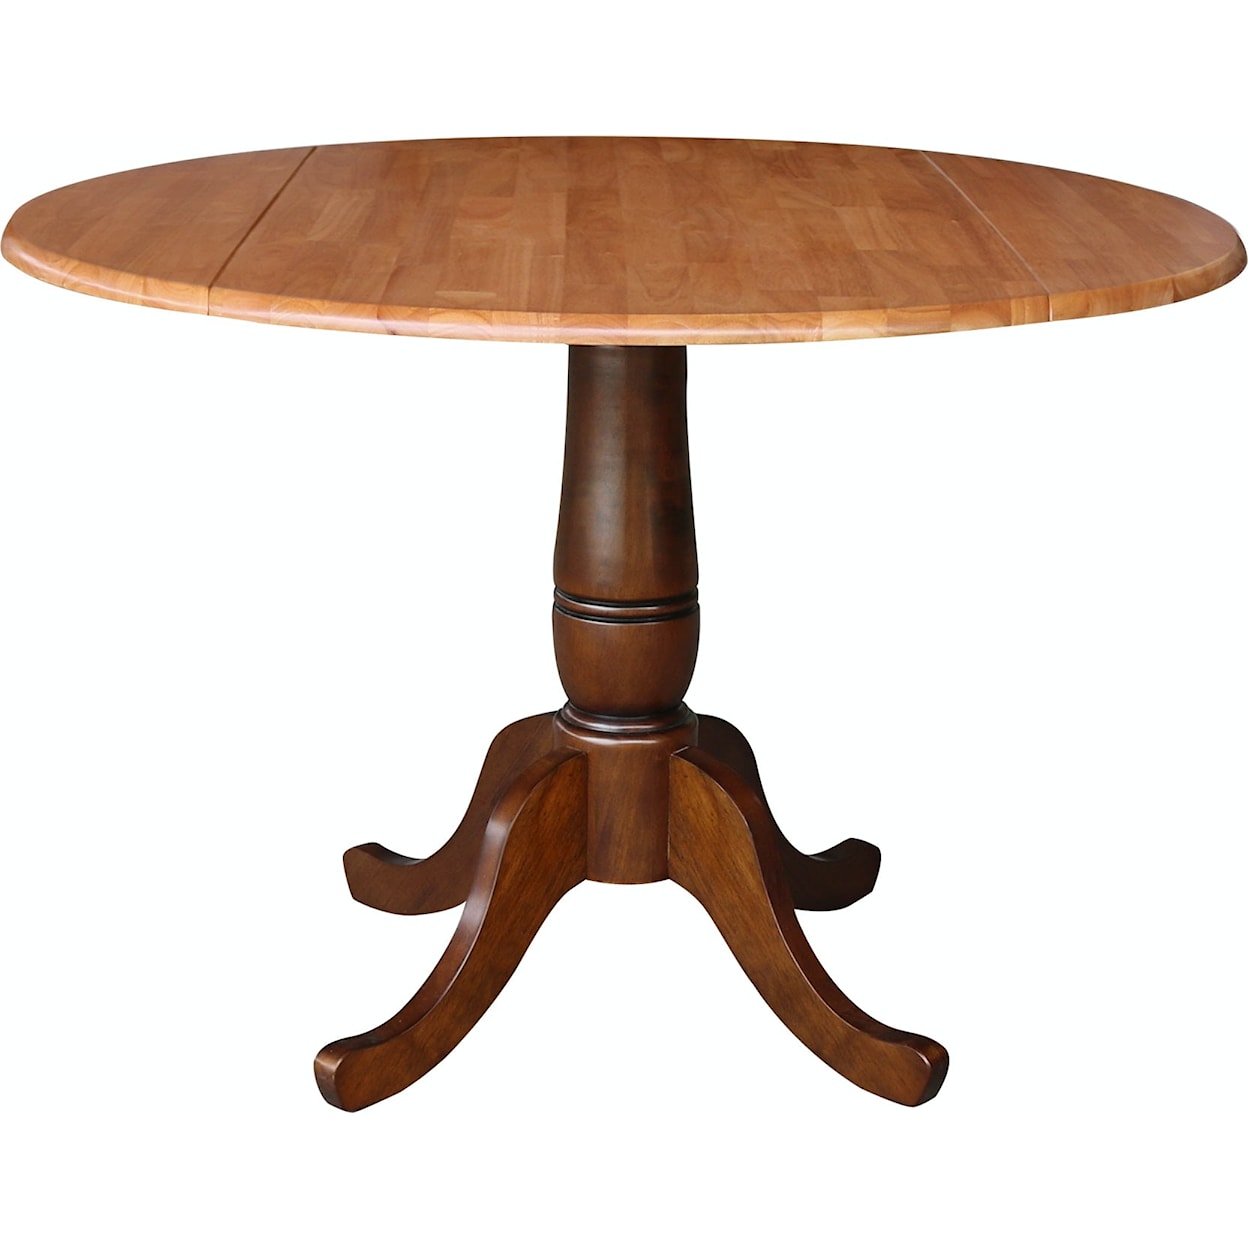 John Thomas Dining Essentials Pedestal Table in Cinnamon / Espresso